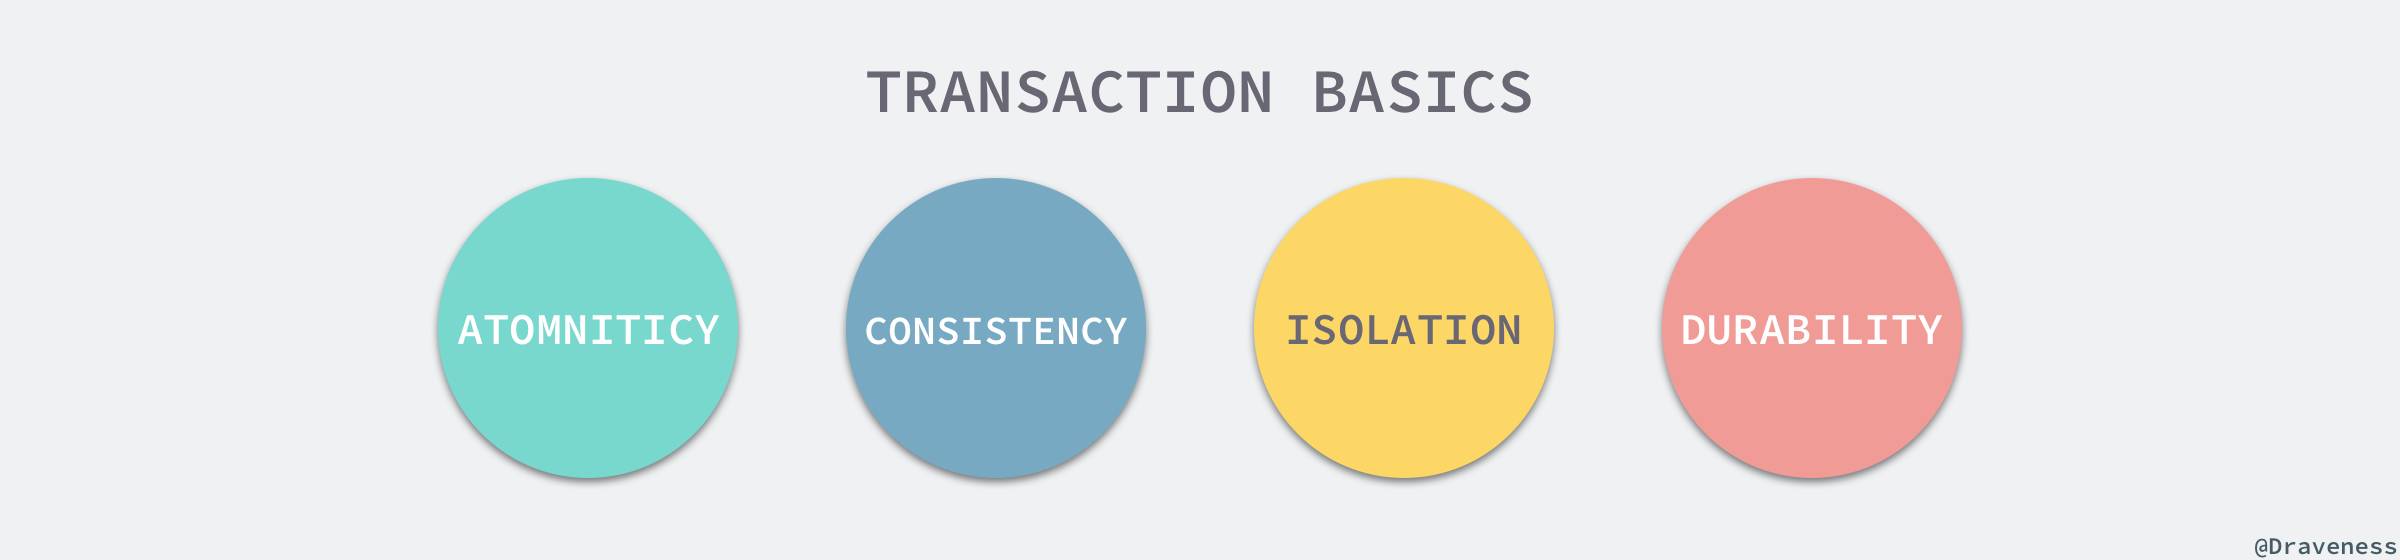 transaction-basics